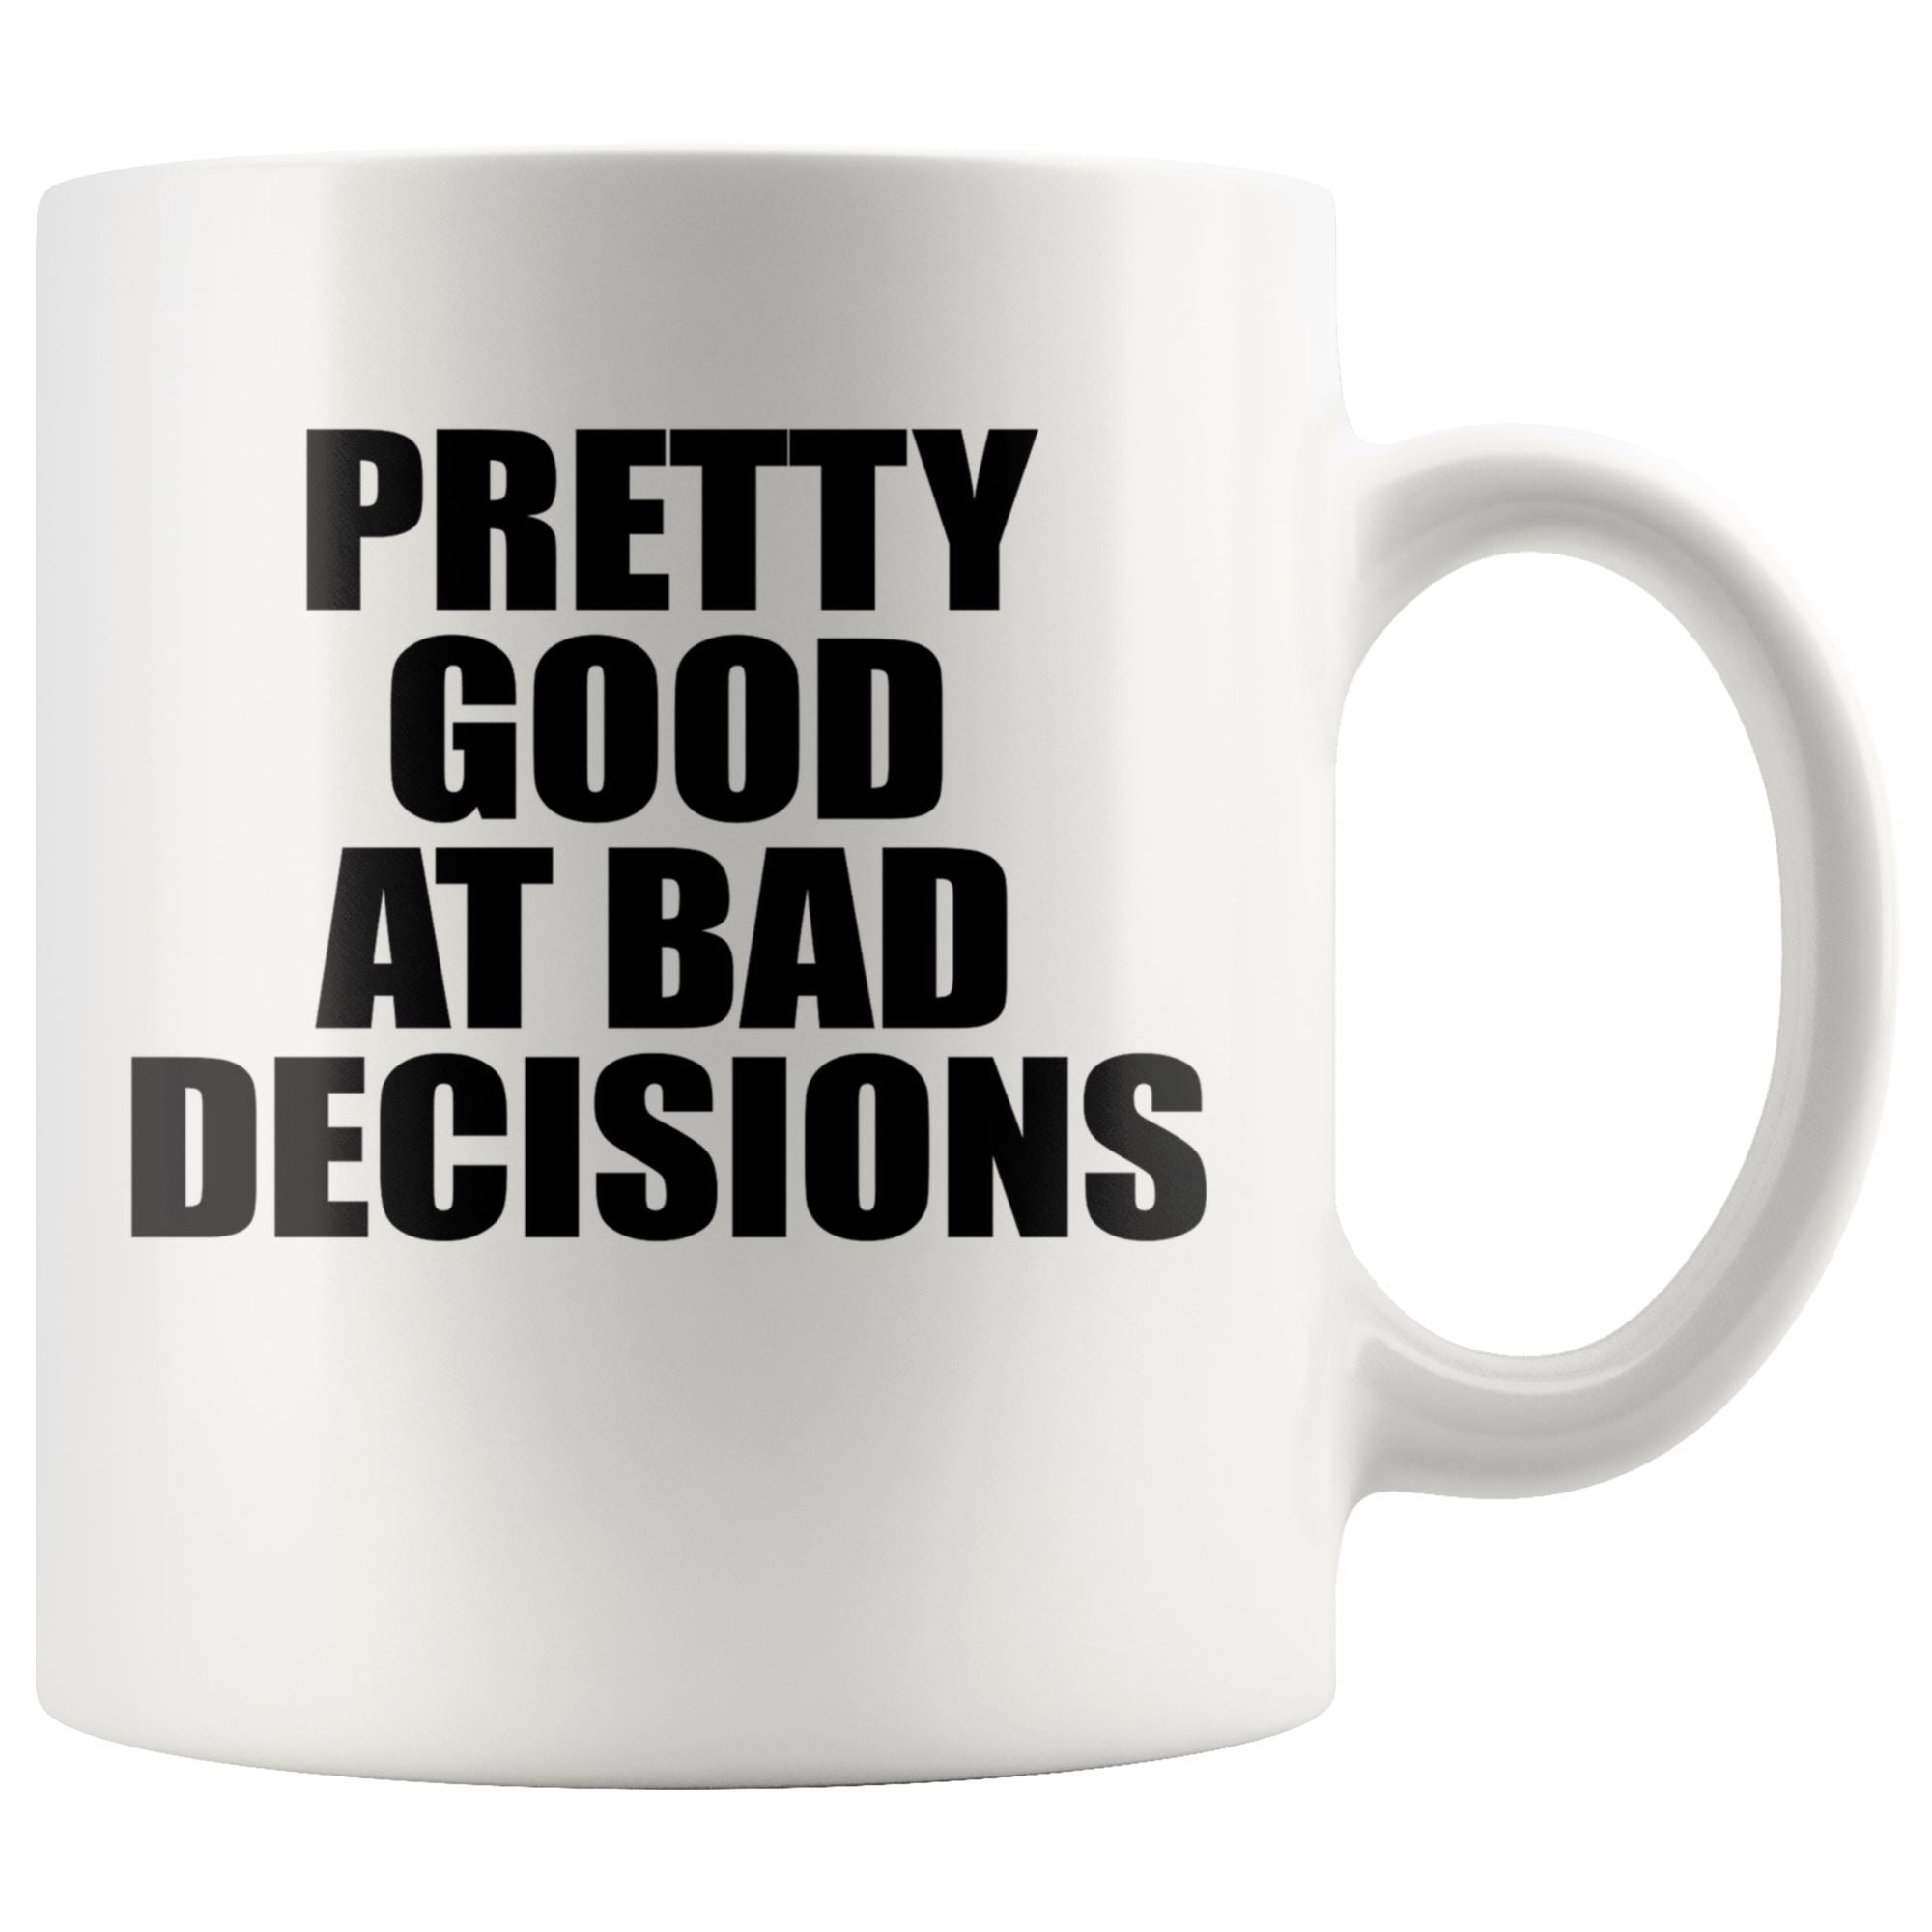 Bad Decisions Drinkware teelaunch 11oz Mug 